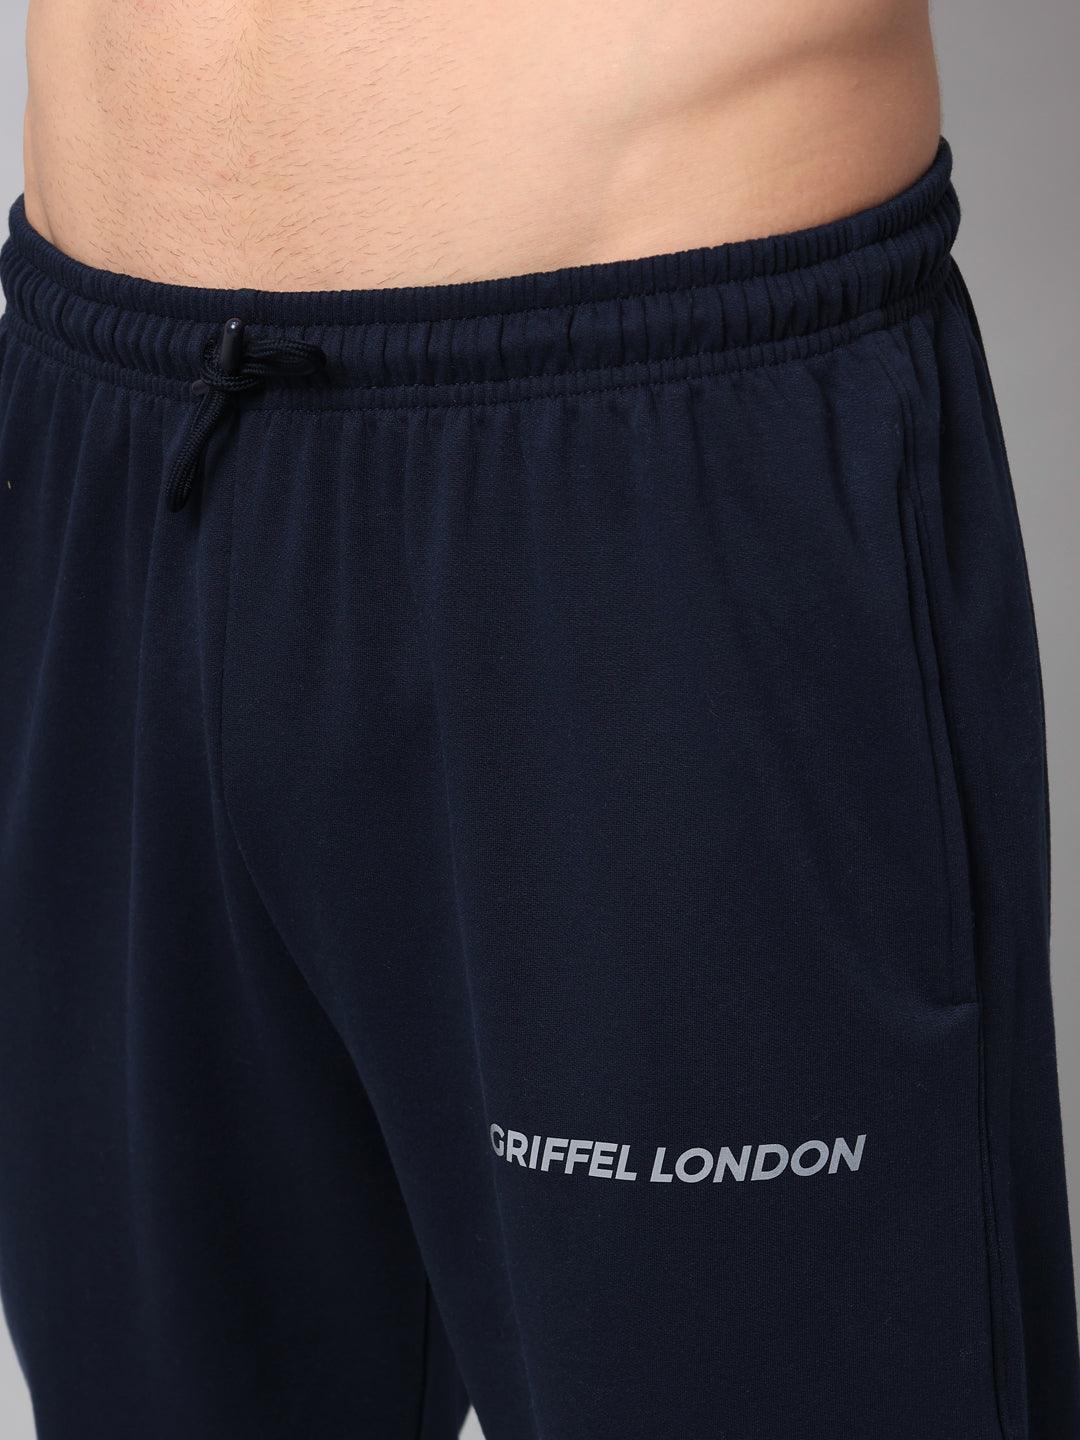 Griffel Men's Front Logo Fleece Zipper and Jogger Full set Navy Tracksuit - griffel